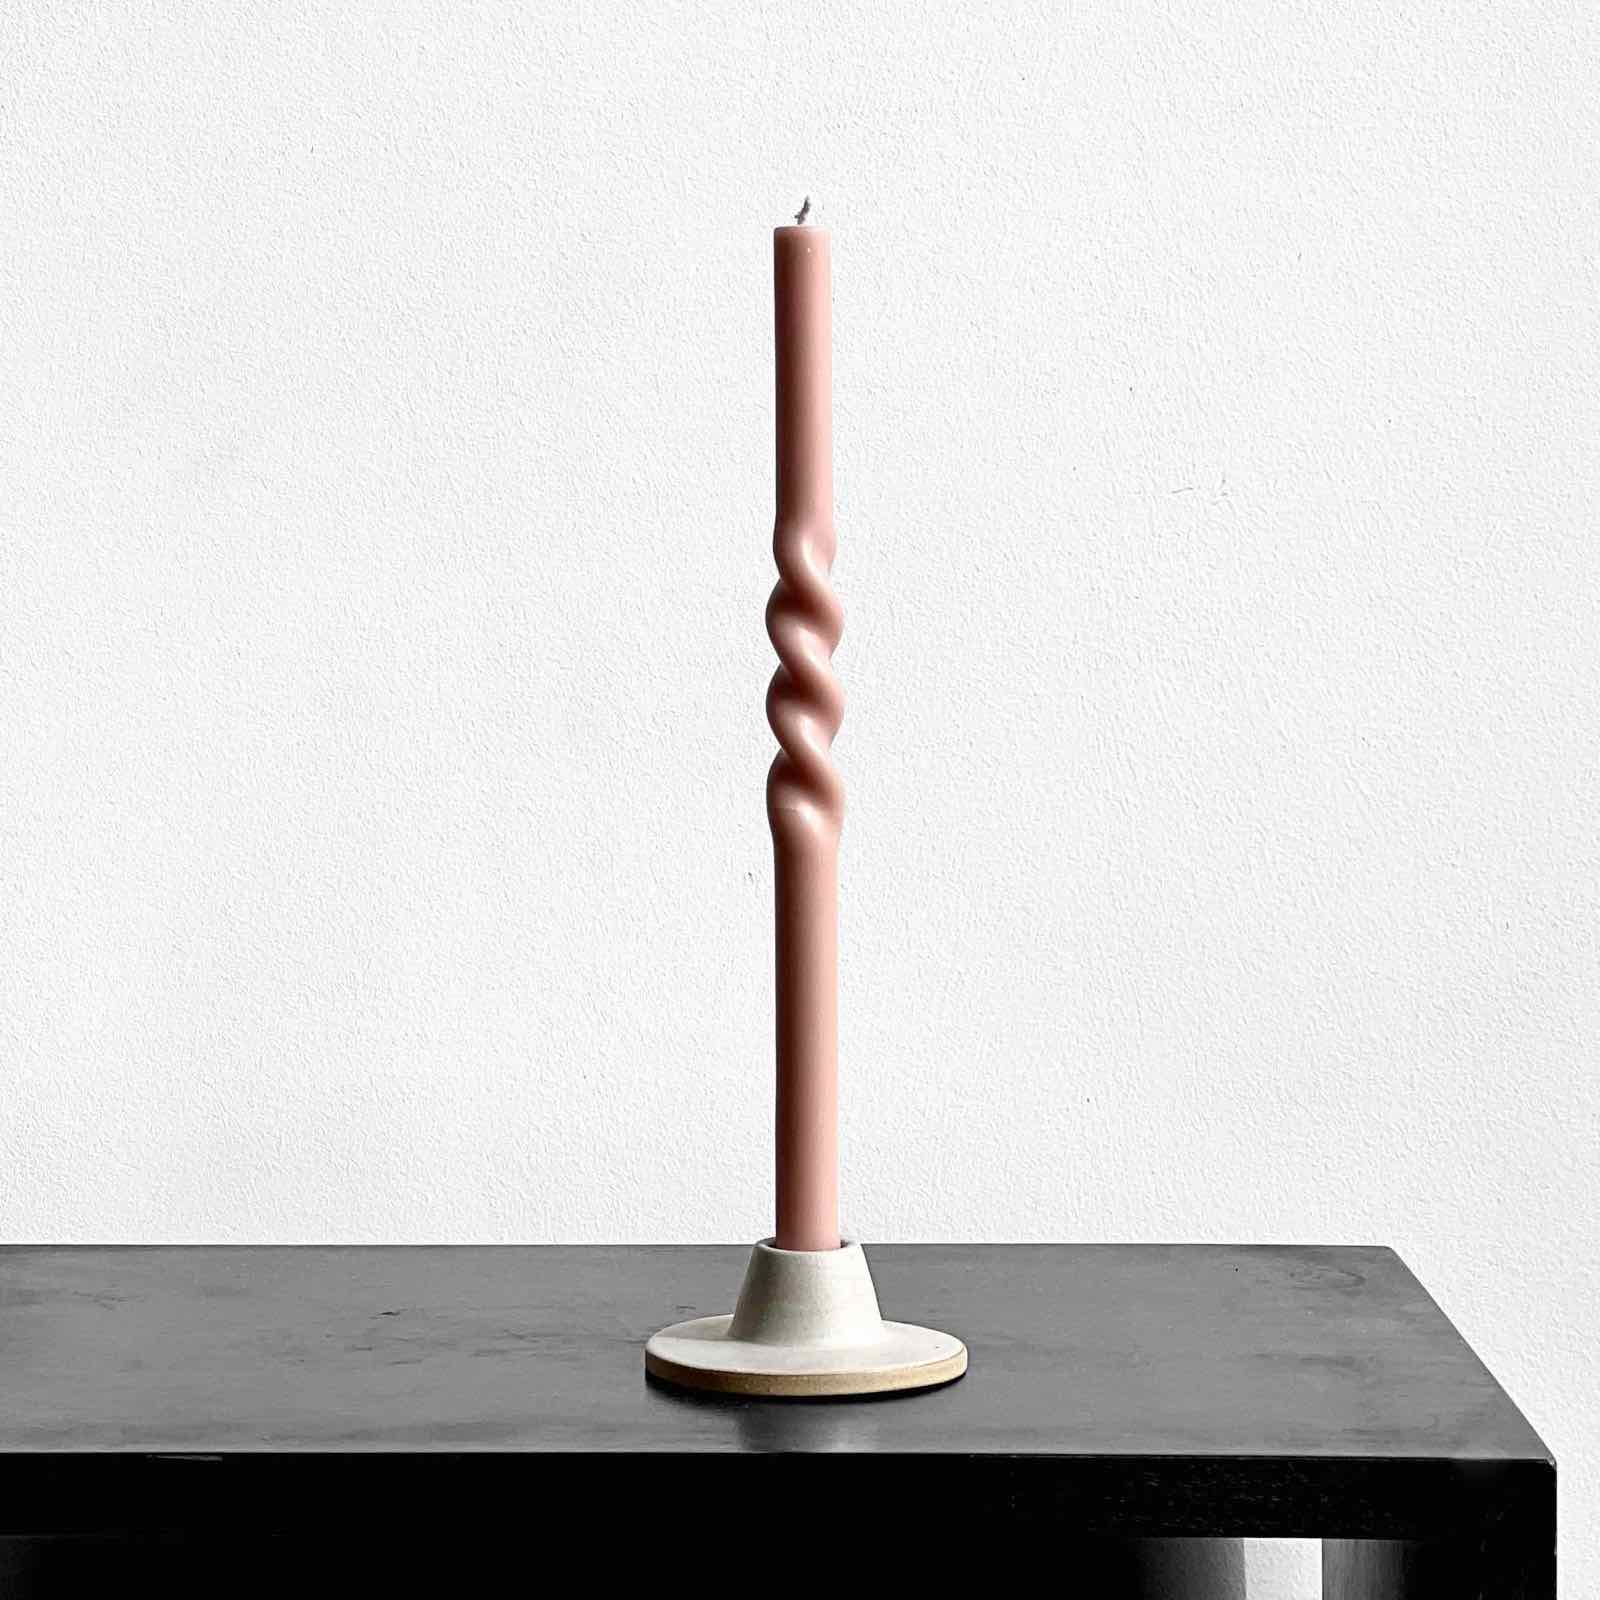 Ceramic candlestick holder